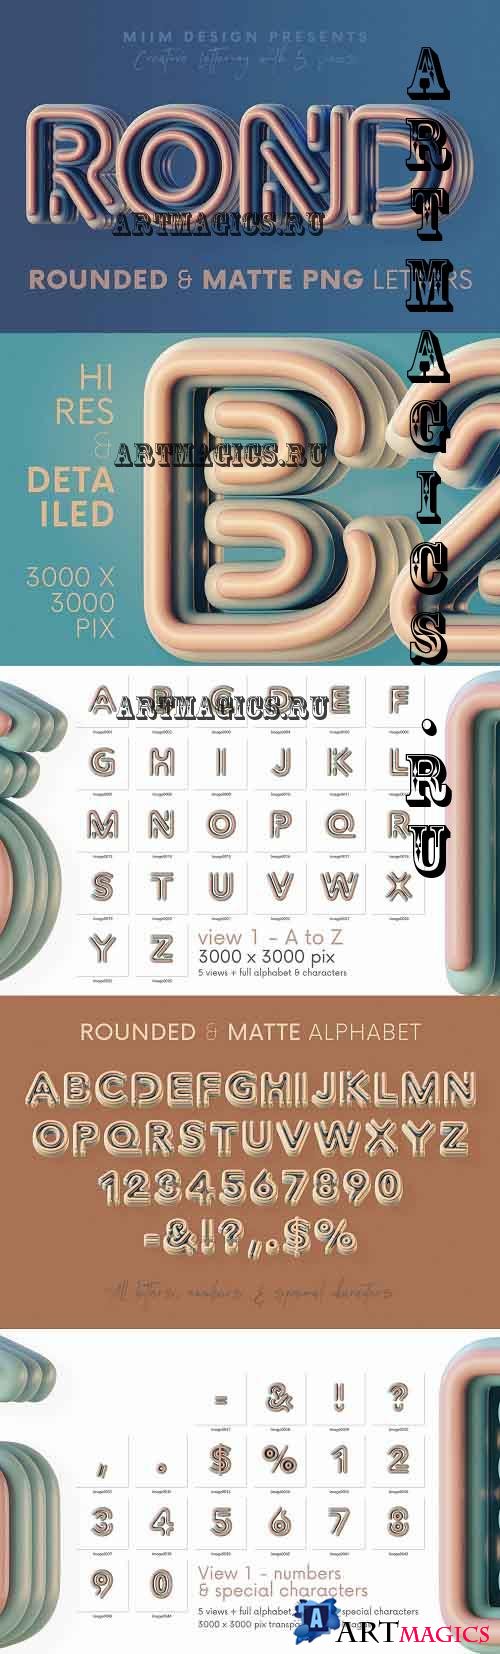 Rounded & Matte - 3D Lettering - 7053146-Rounded-Matte-3D-Lettering